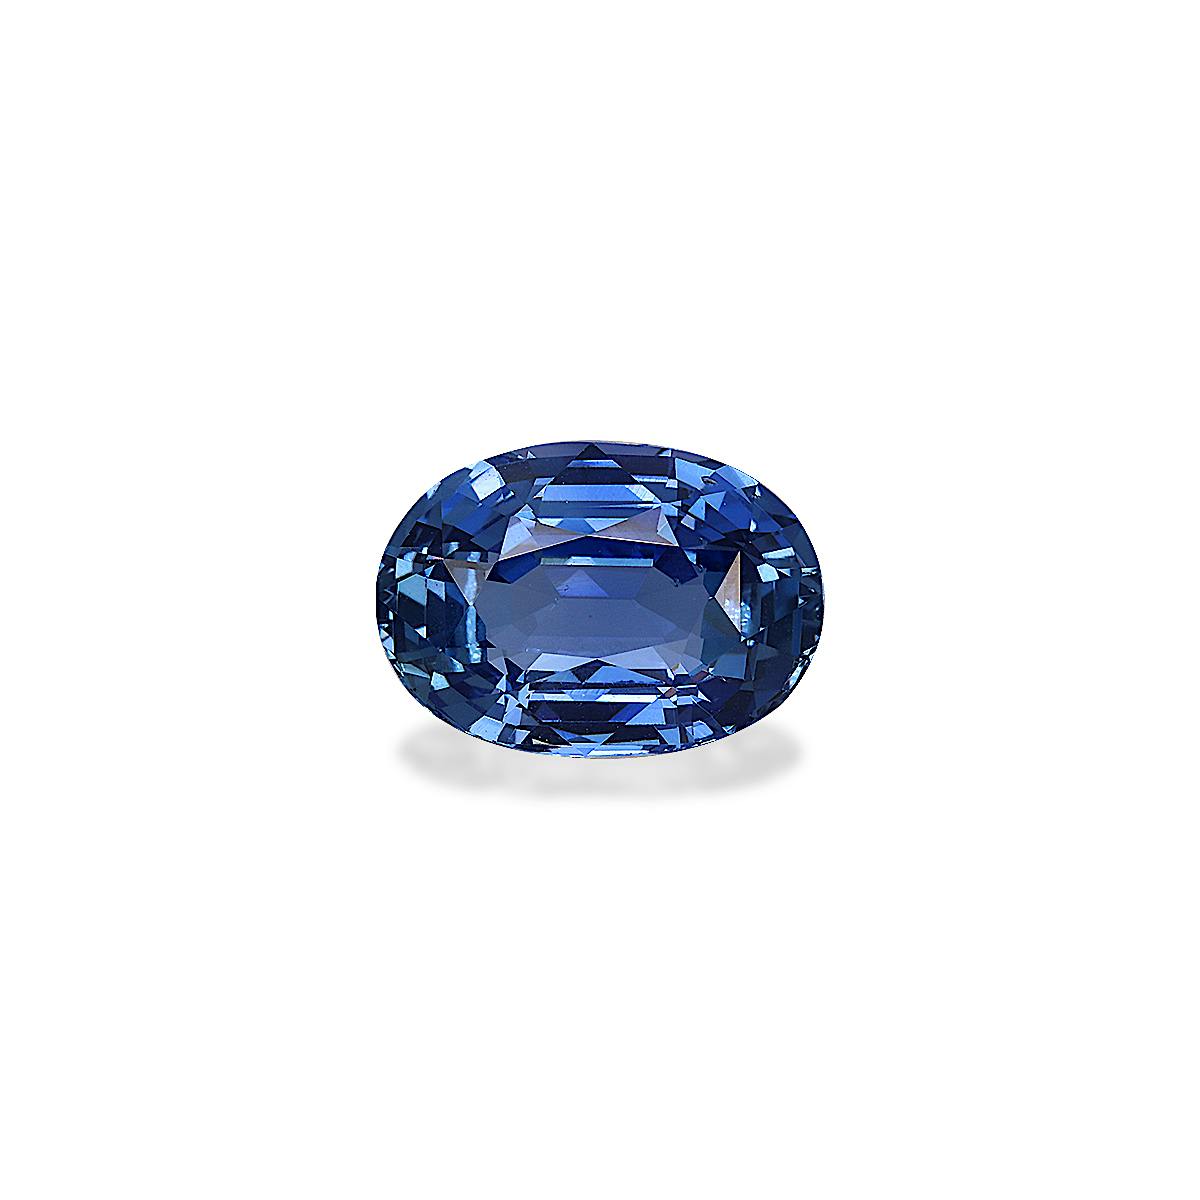 Blue Sapphire 3.73ct - Main Image